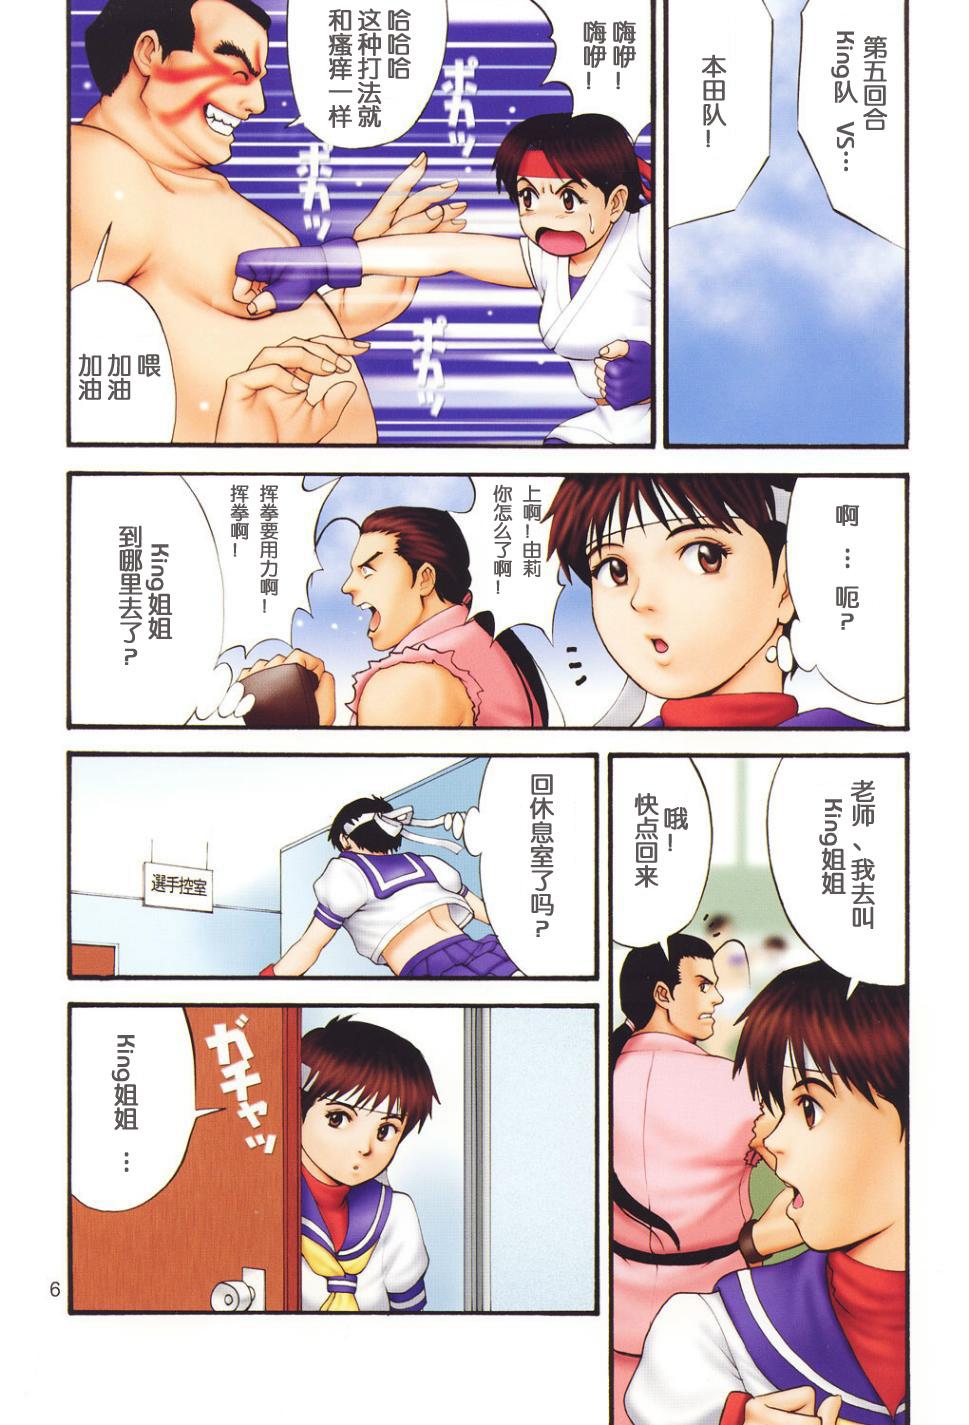 Old Man The Yuri & Friends Fullcolor 4 SAKURA vs. YURI EDITION - Street fighter King of fighters Gay Deepthroat - Page 5